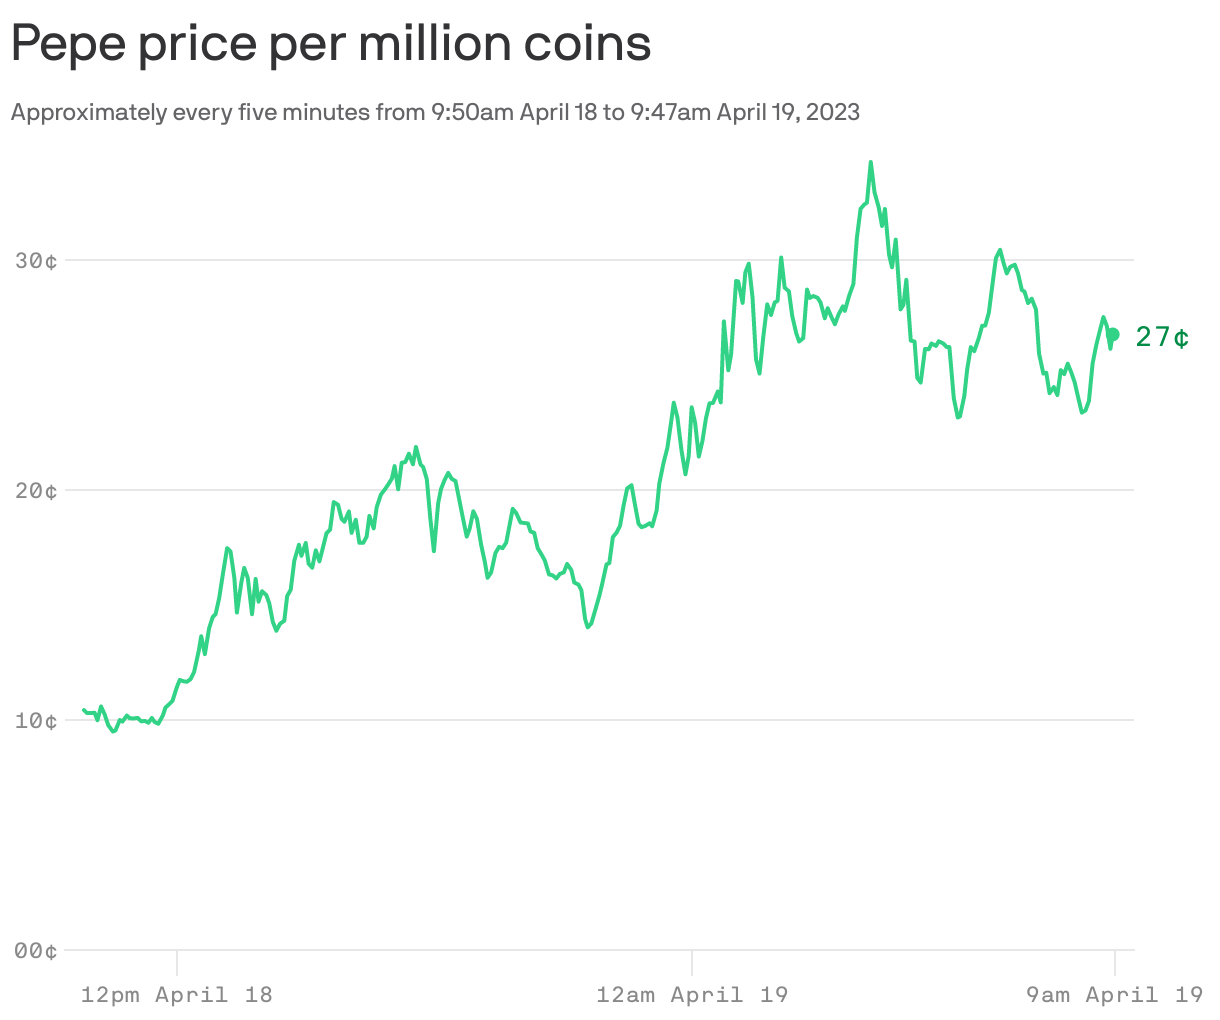 Pepe price per million coins